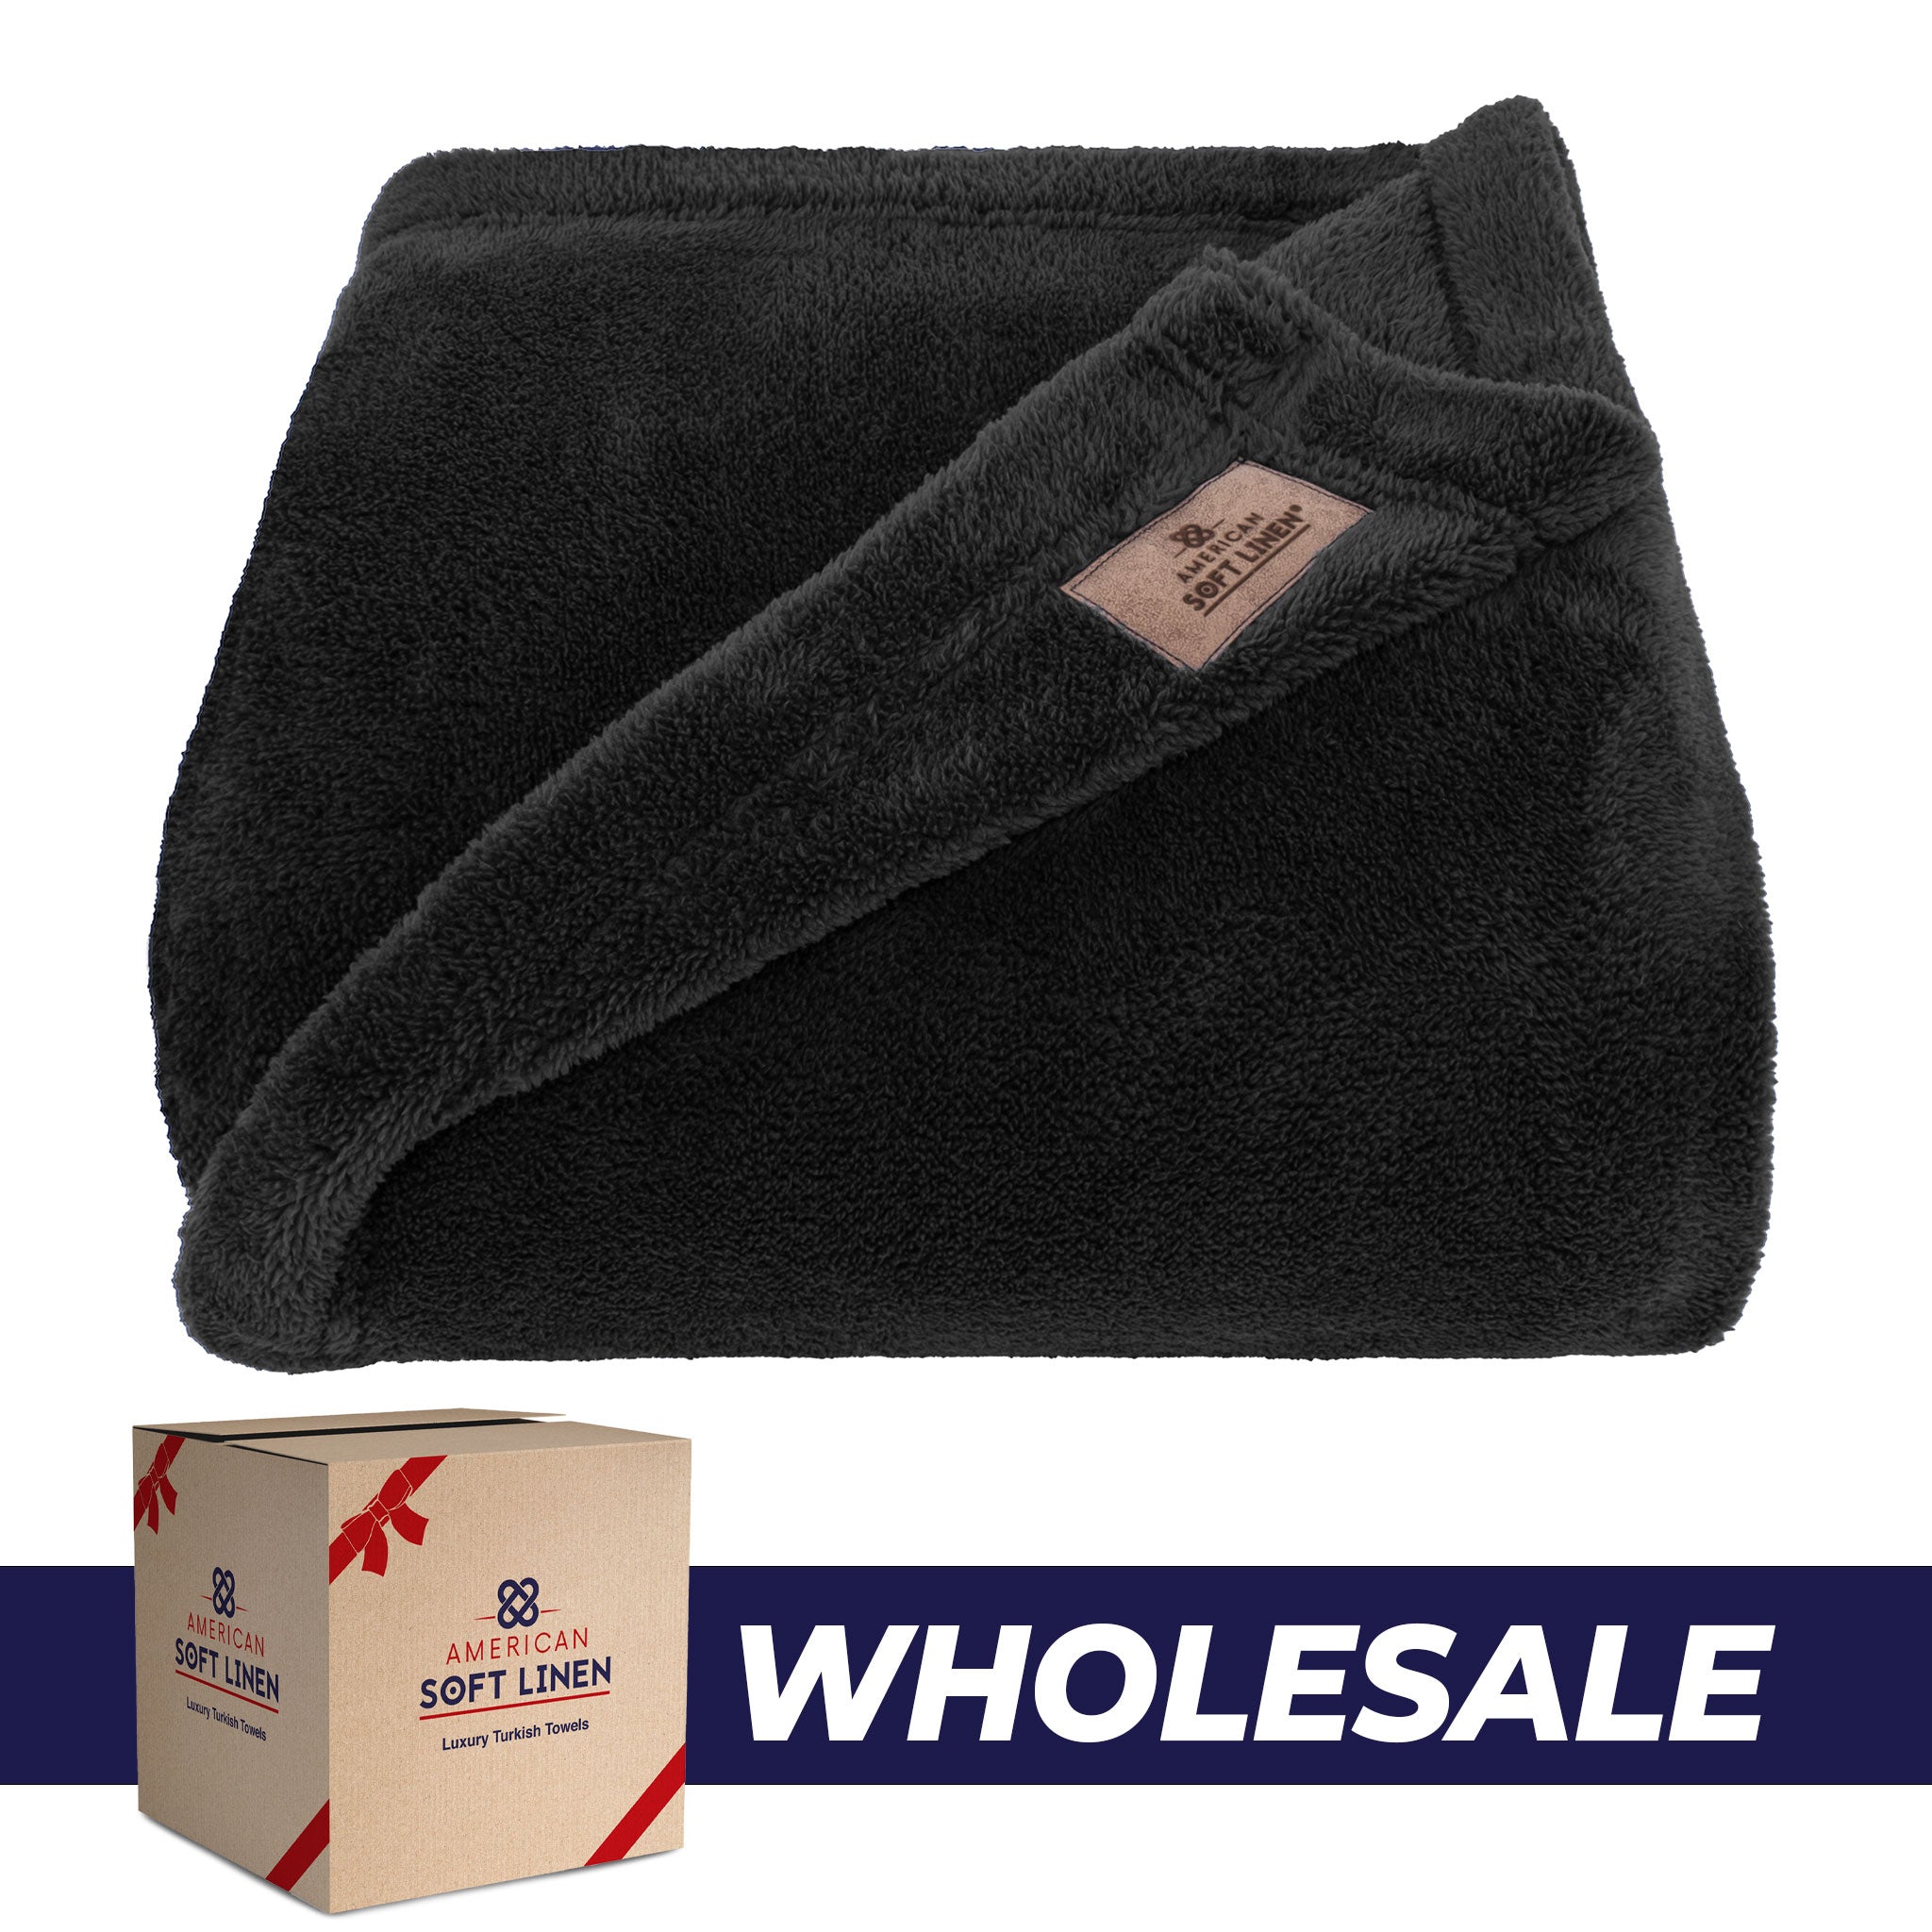 American Soft Linen - Bedding Fleece Blanket - Wholesale - 15 Set Case Pack - Twin Size 60x80 inches - Black - 0